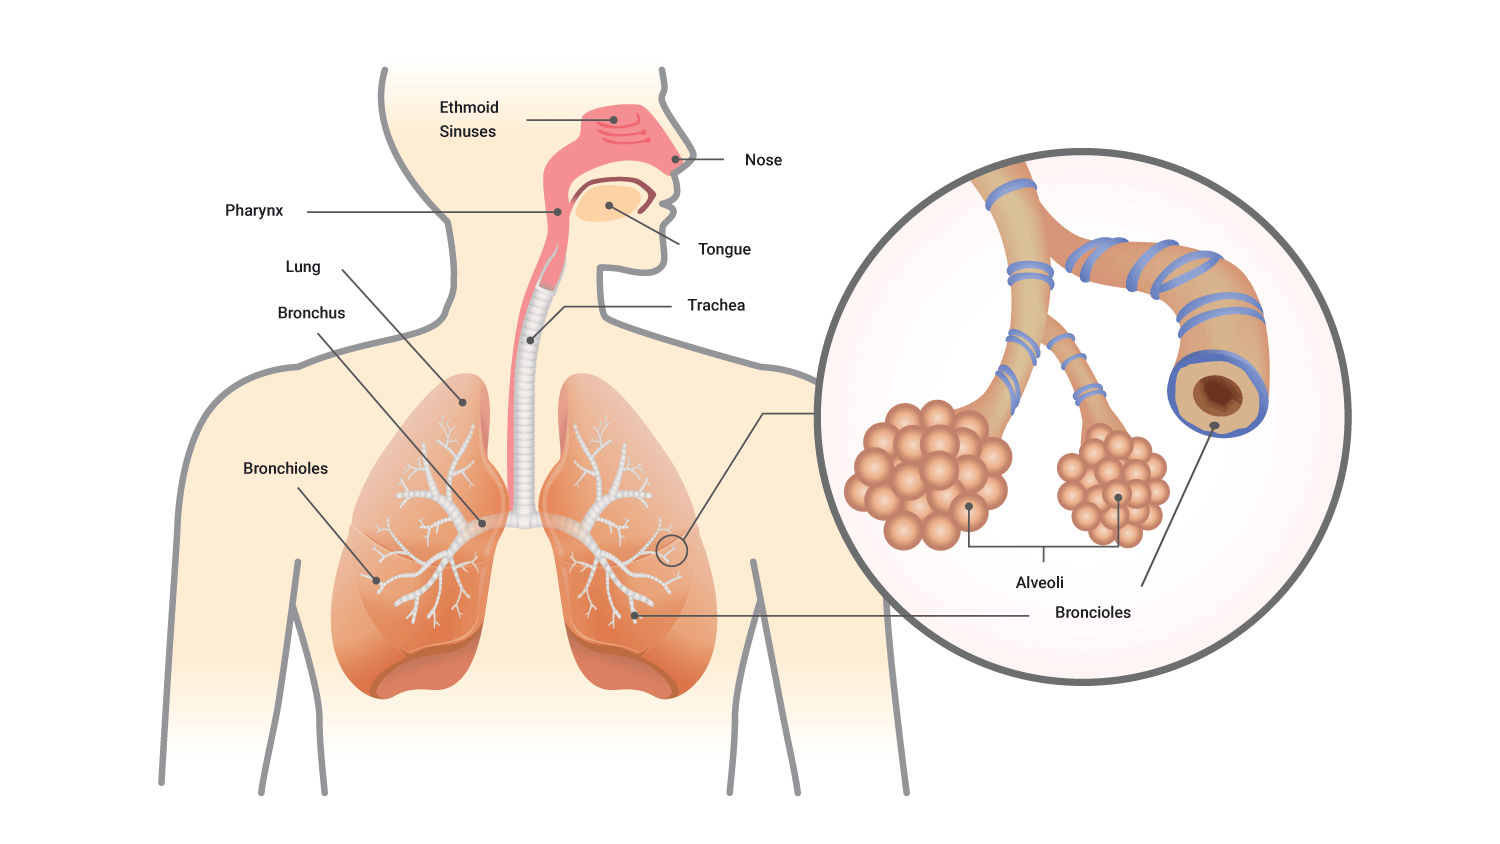 Image showing respiratory system, highlighting alveoli